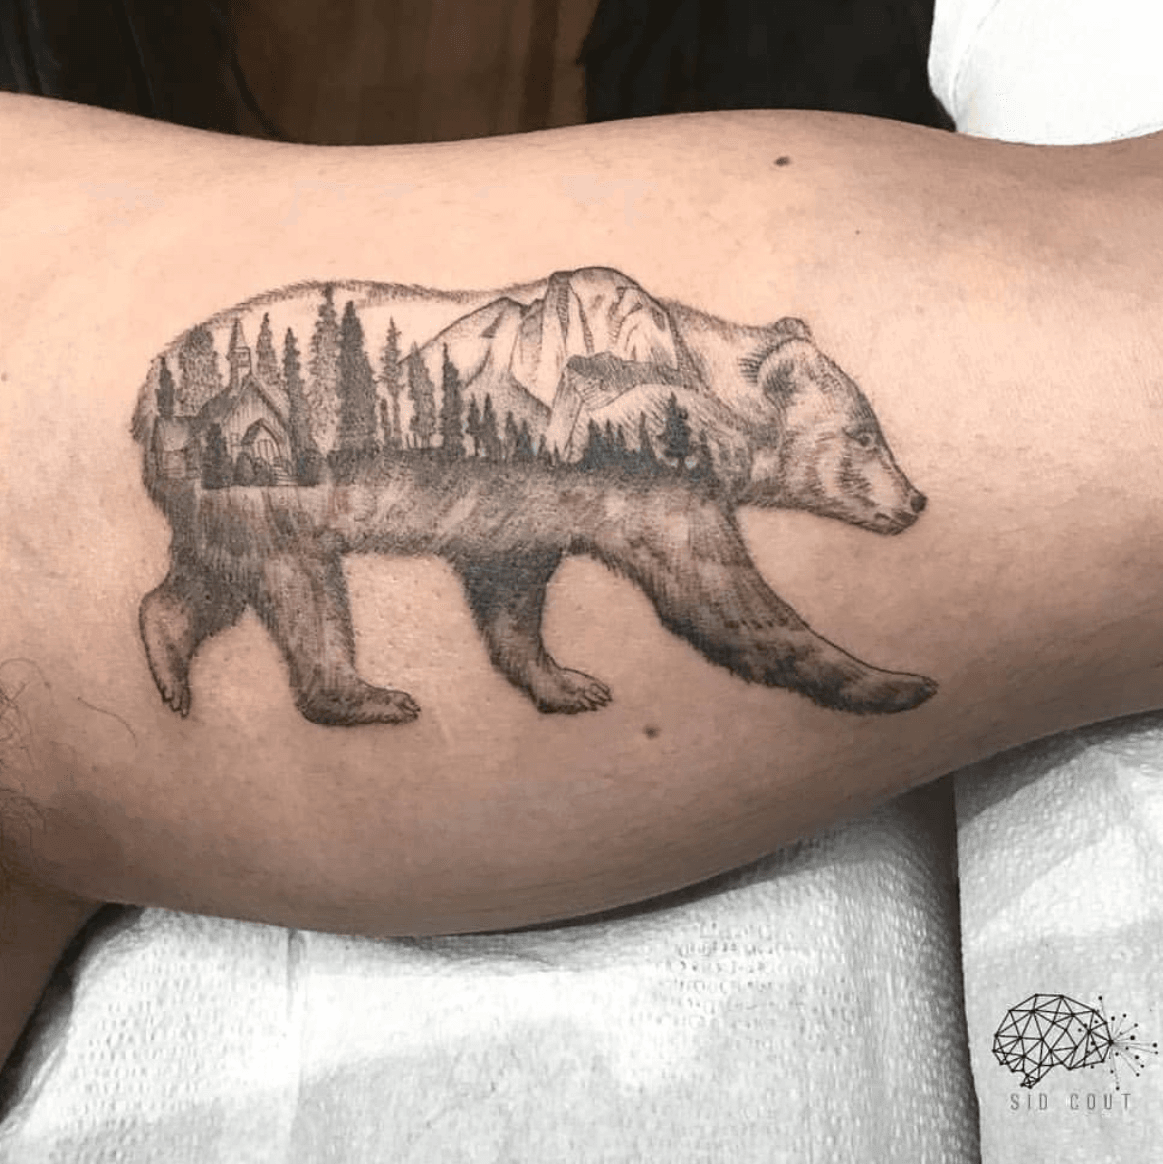 CALIFORNIA BEAR by Jhon Gutti TattooNOW